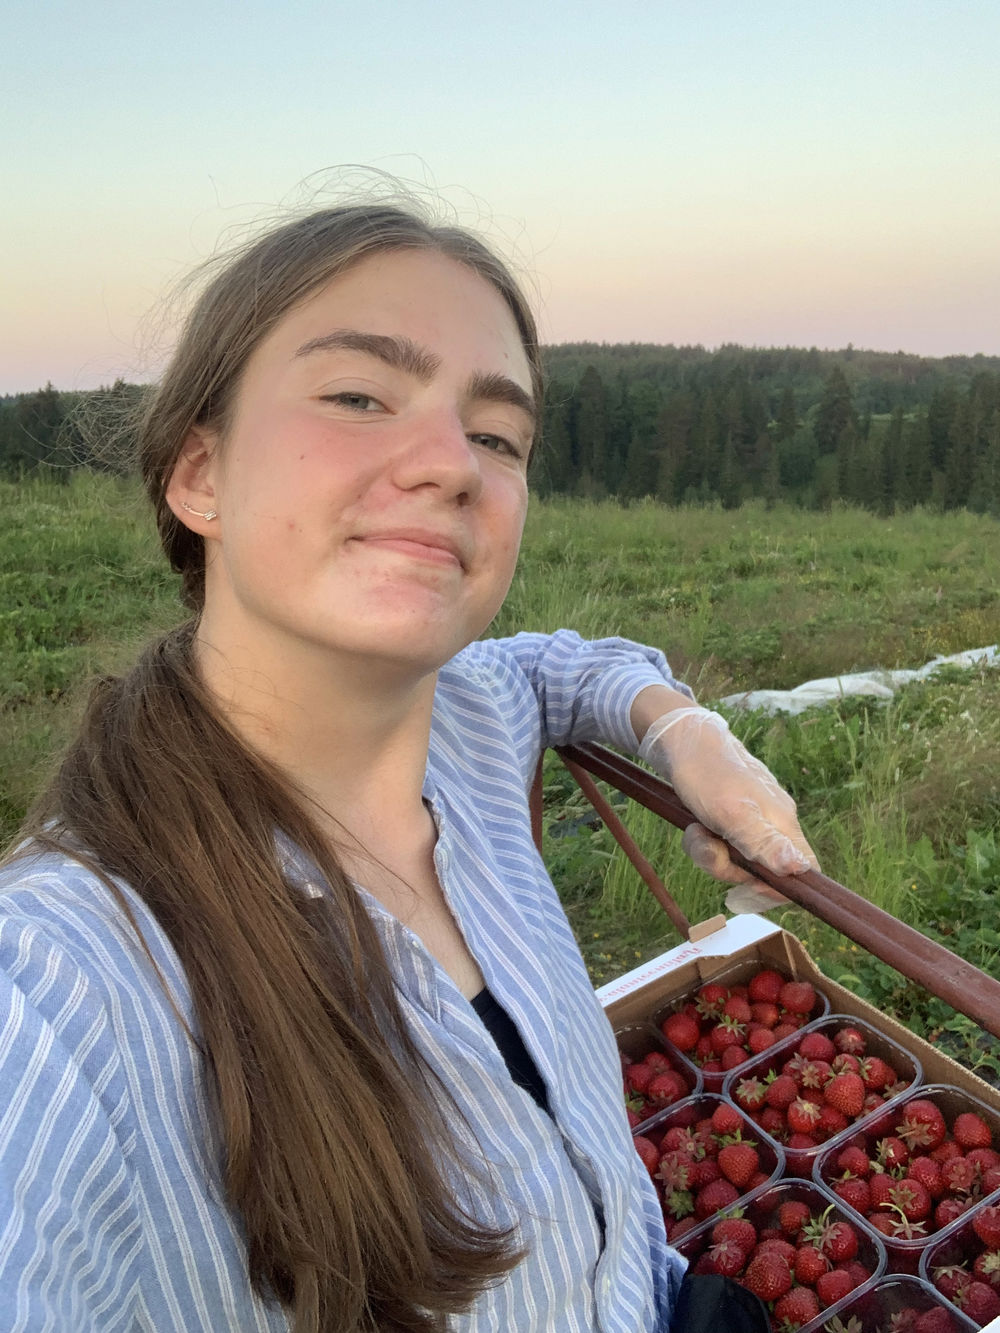 Karina at strawberry farm in Finland (Photo by Karina)